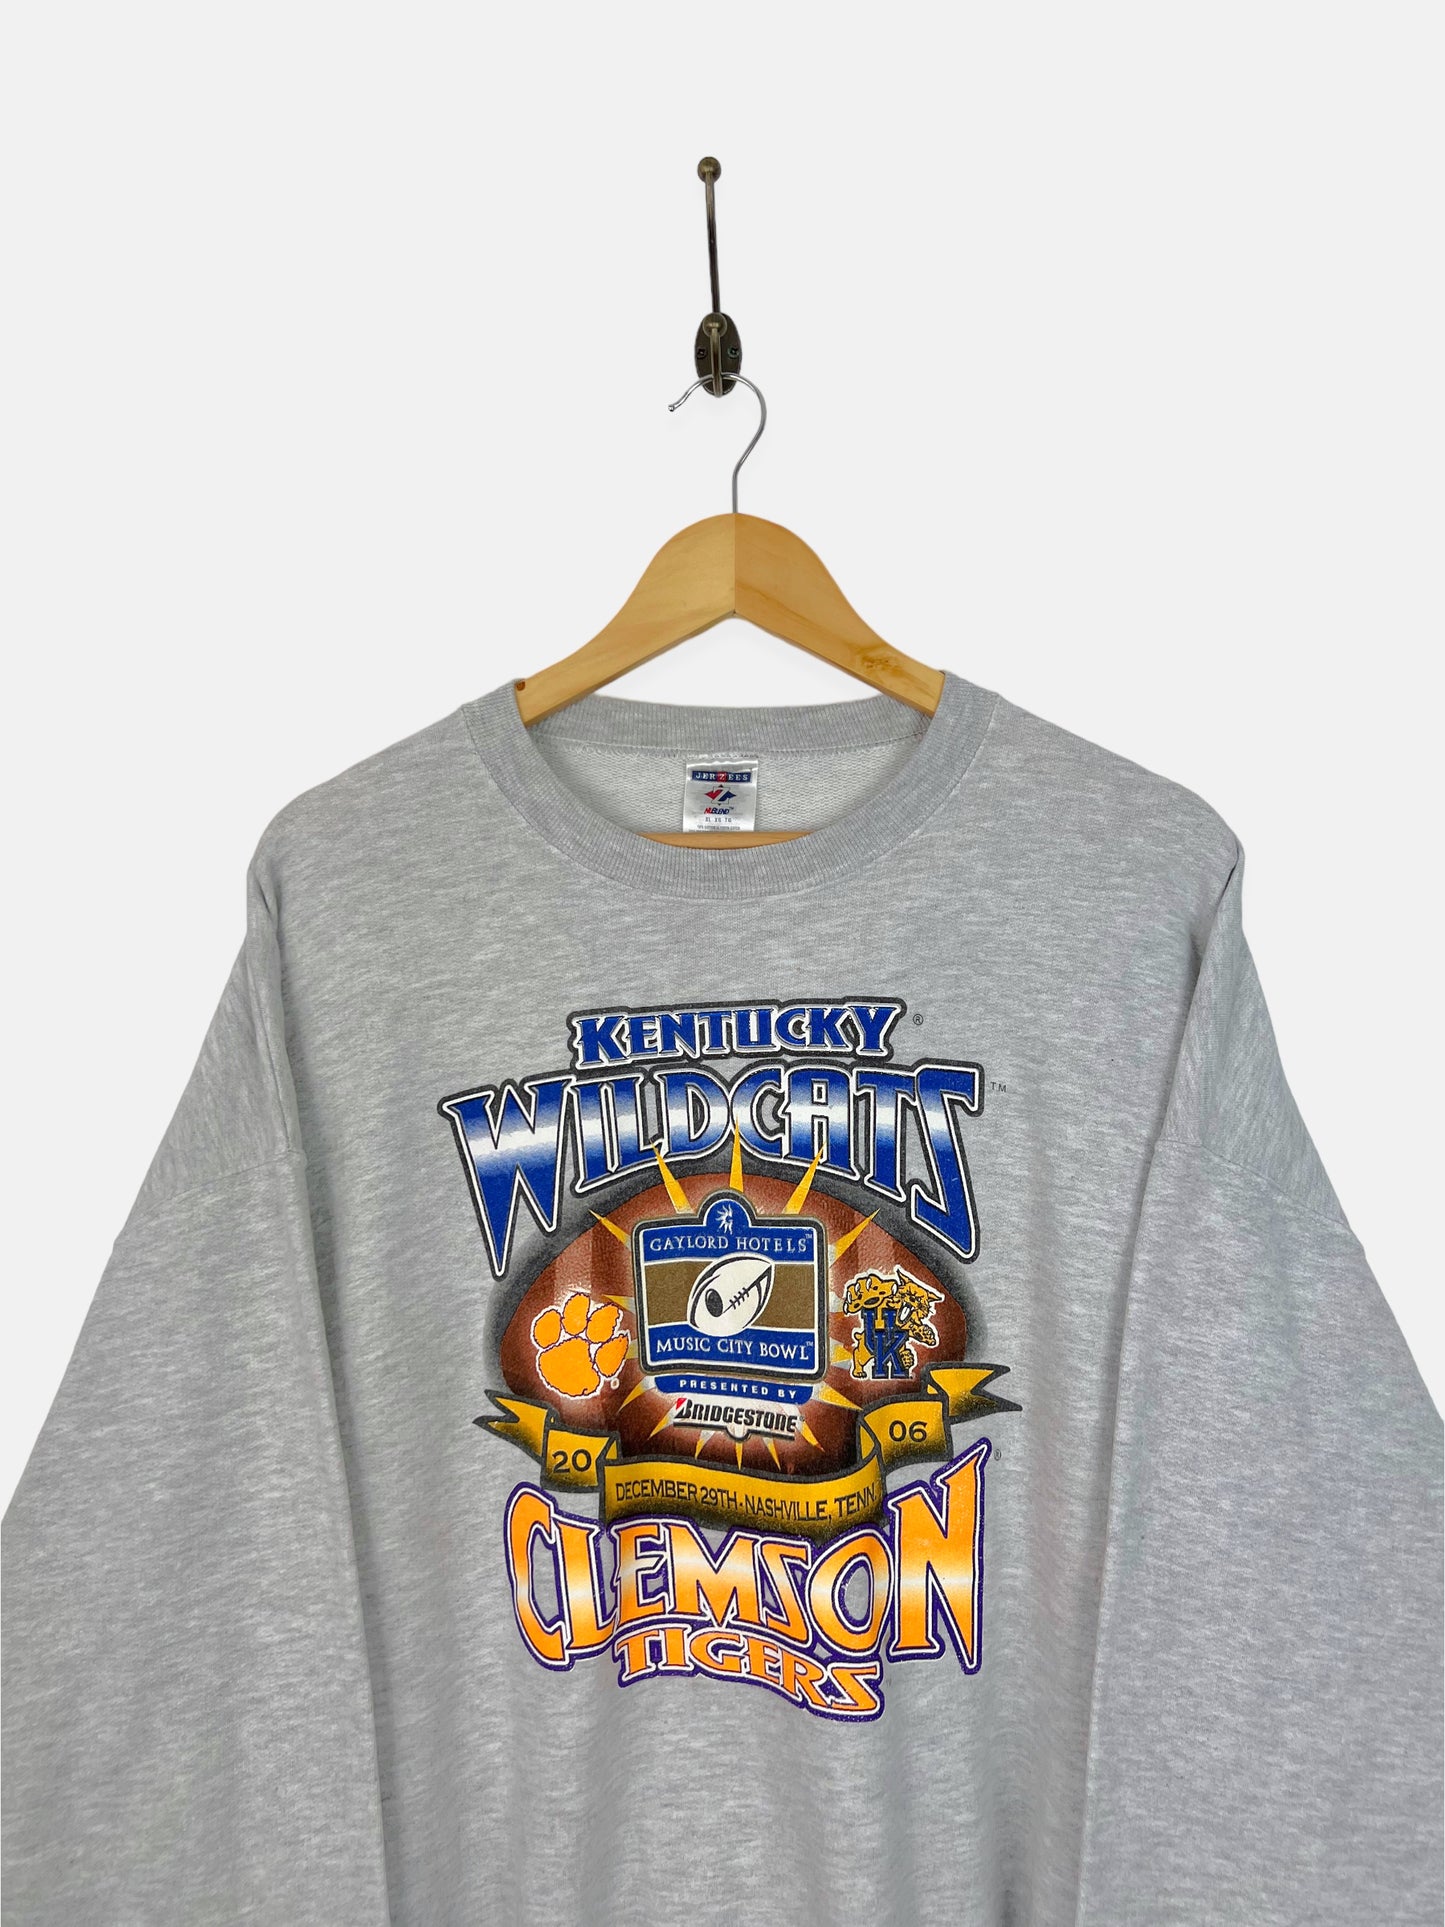 Kentucky Wildcats Vintage Lightweight Sweatshirt Size L